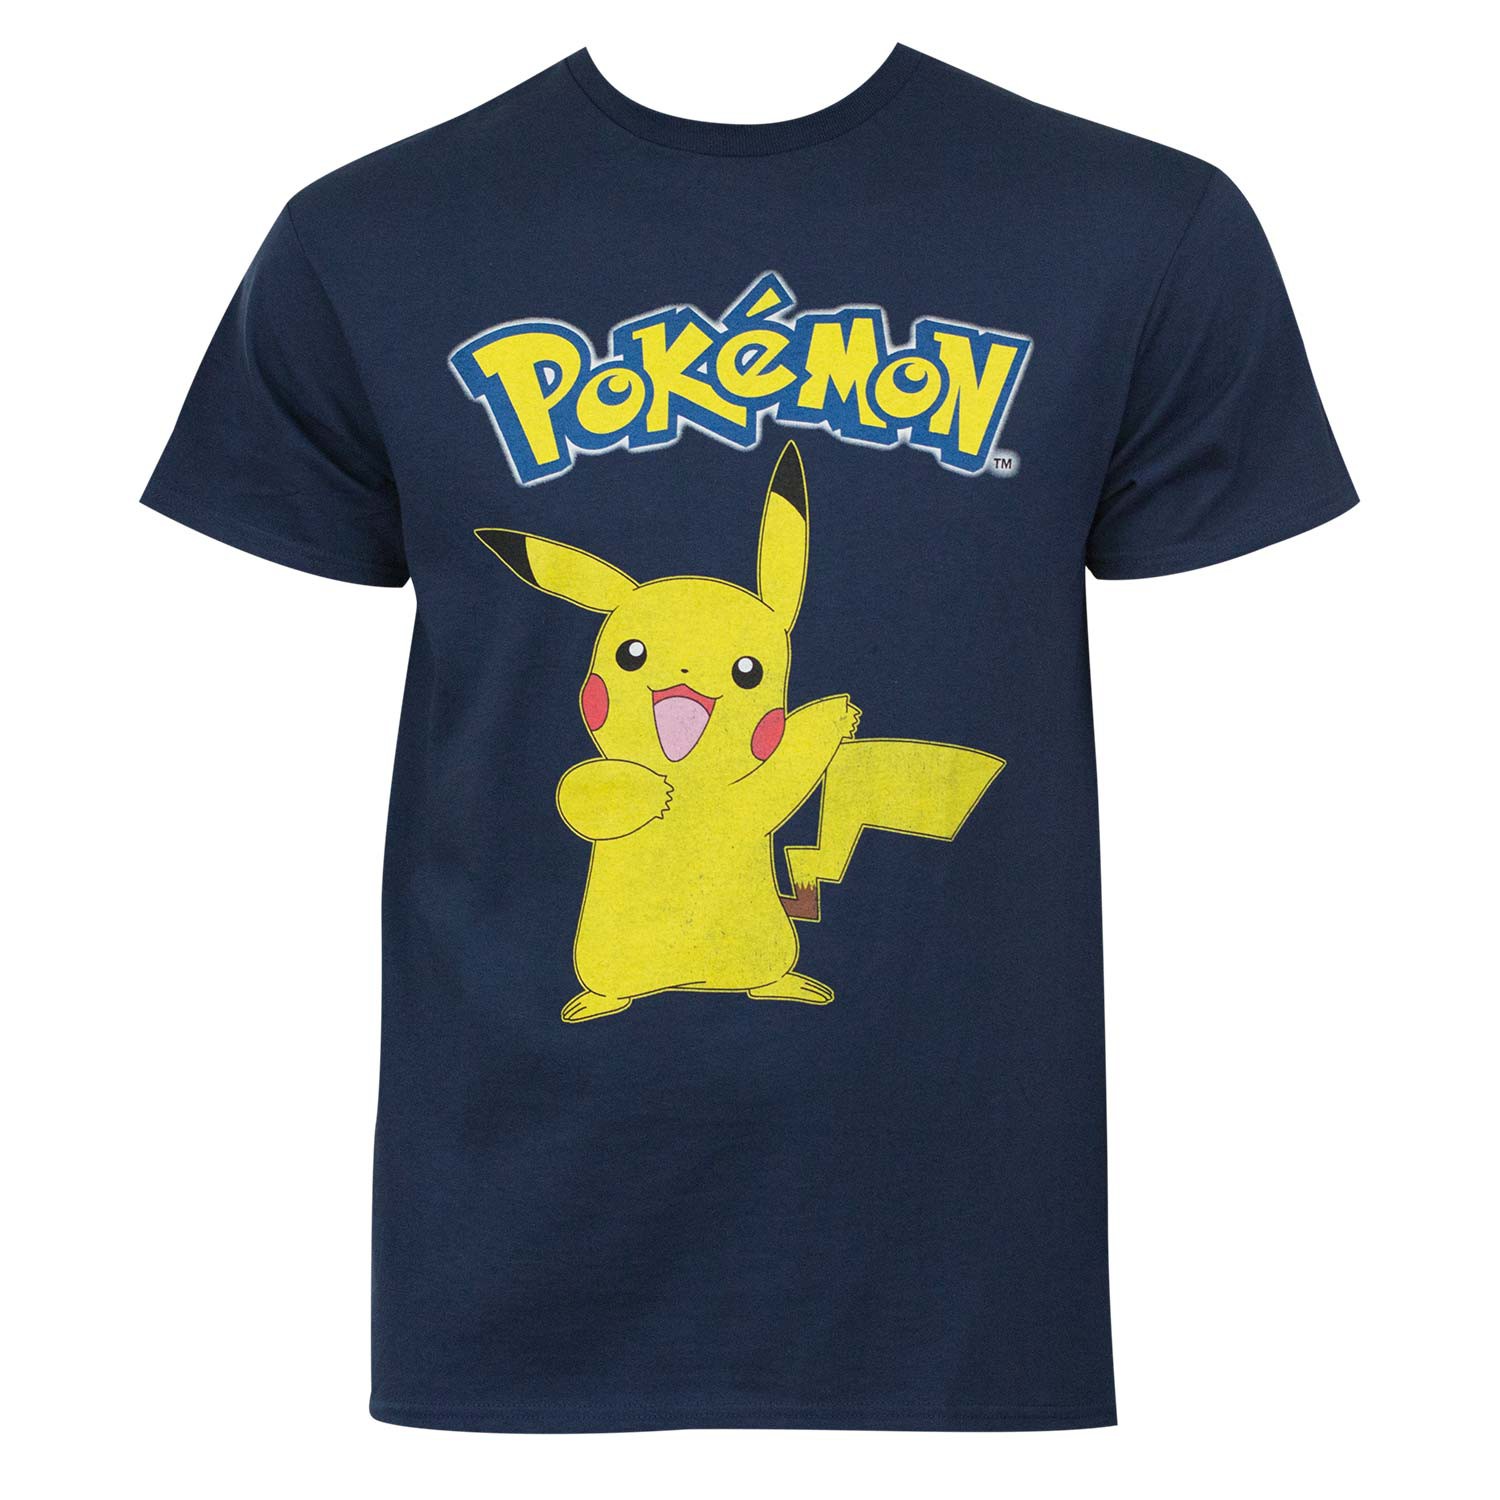 Pokemon Pikachu Navy Blue Tee Shirt